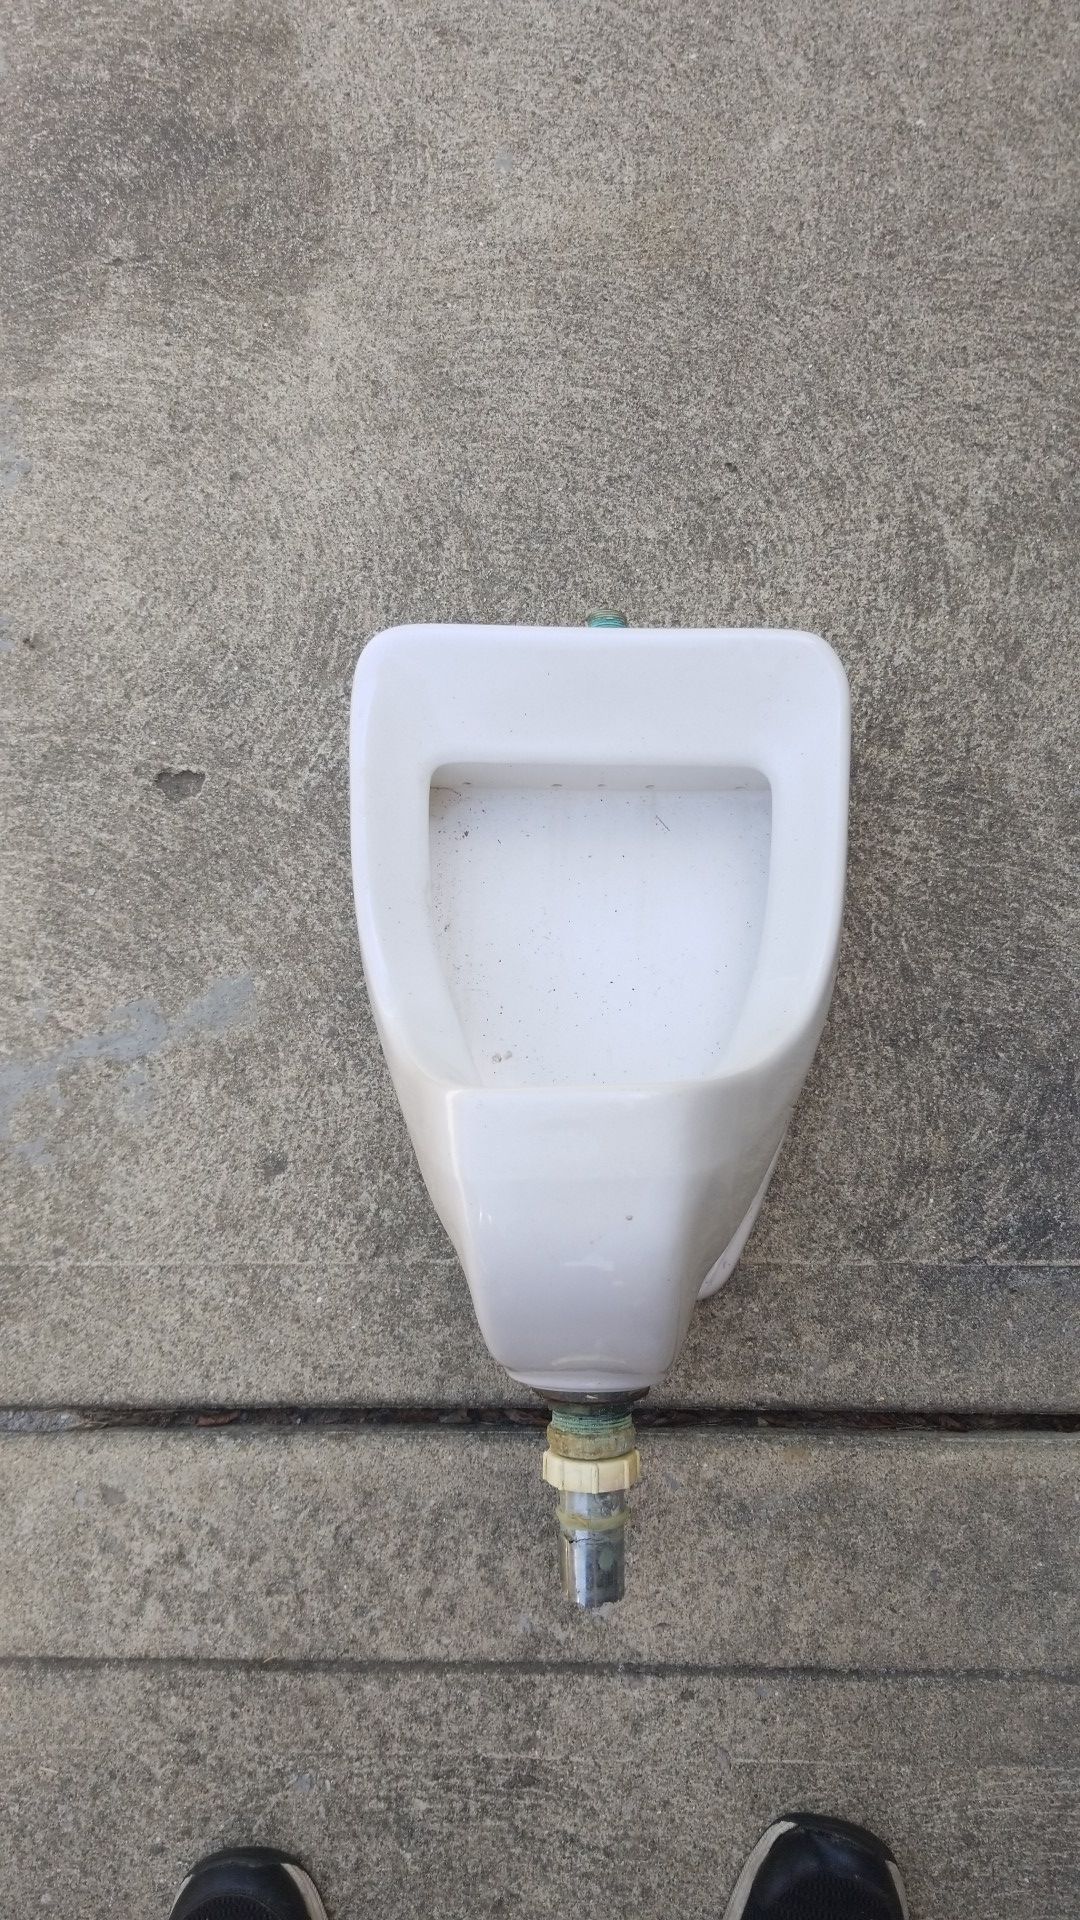 Mansfield urinal